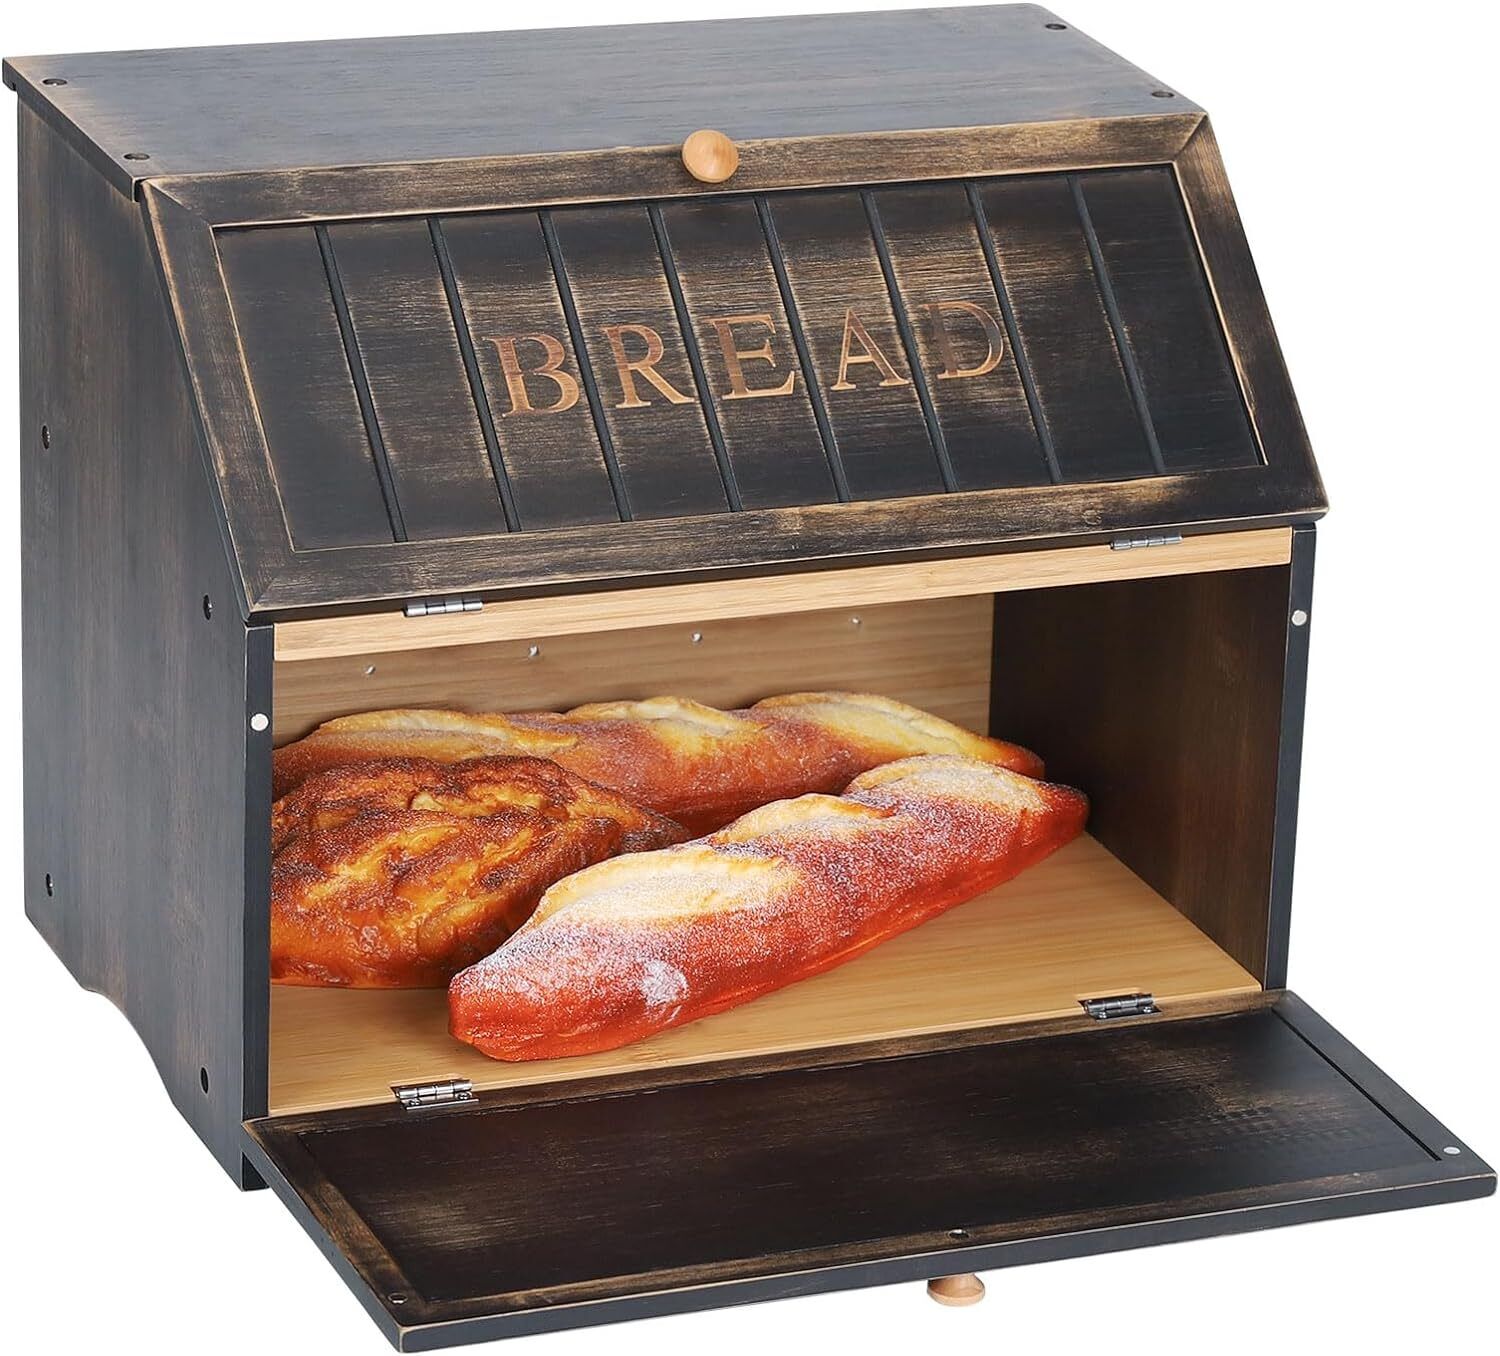 HOMEKOKO Double Layer Large Bread Box for Kitchen Counter Retro Design Wooden